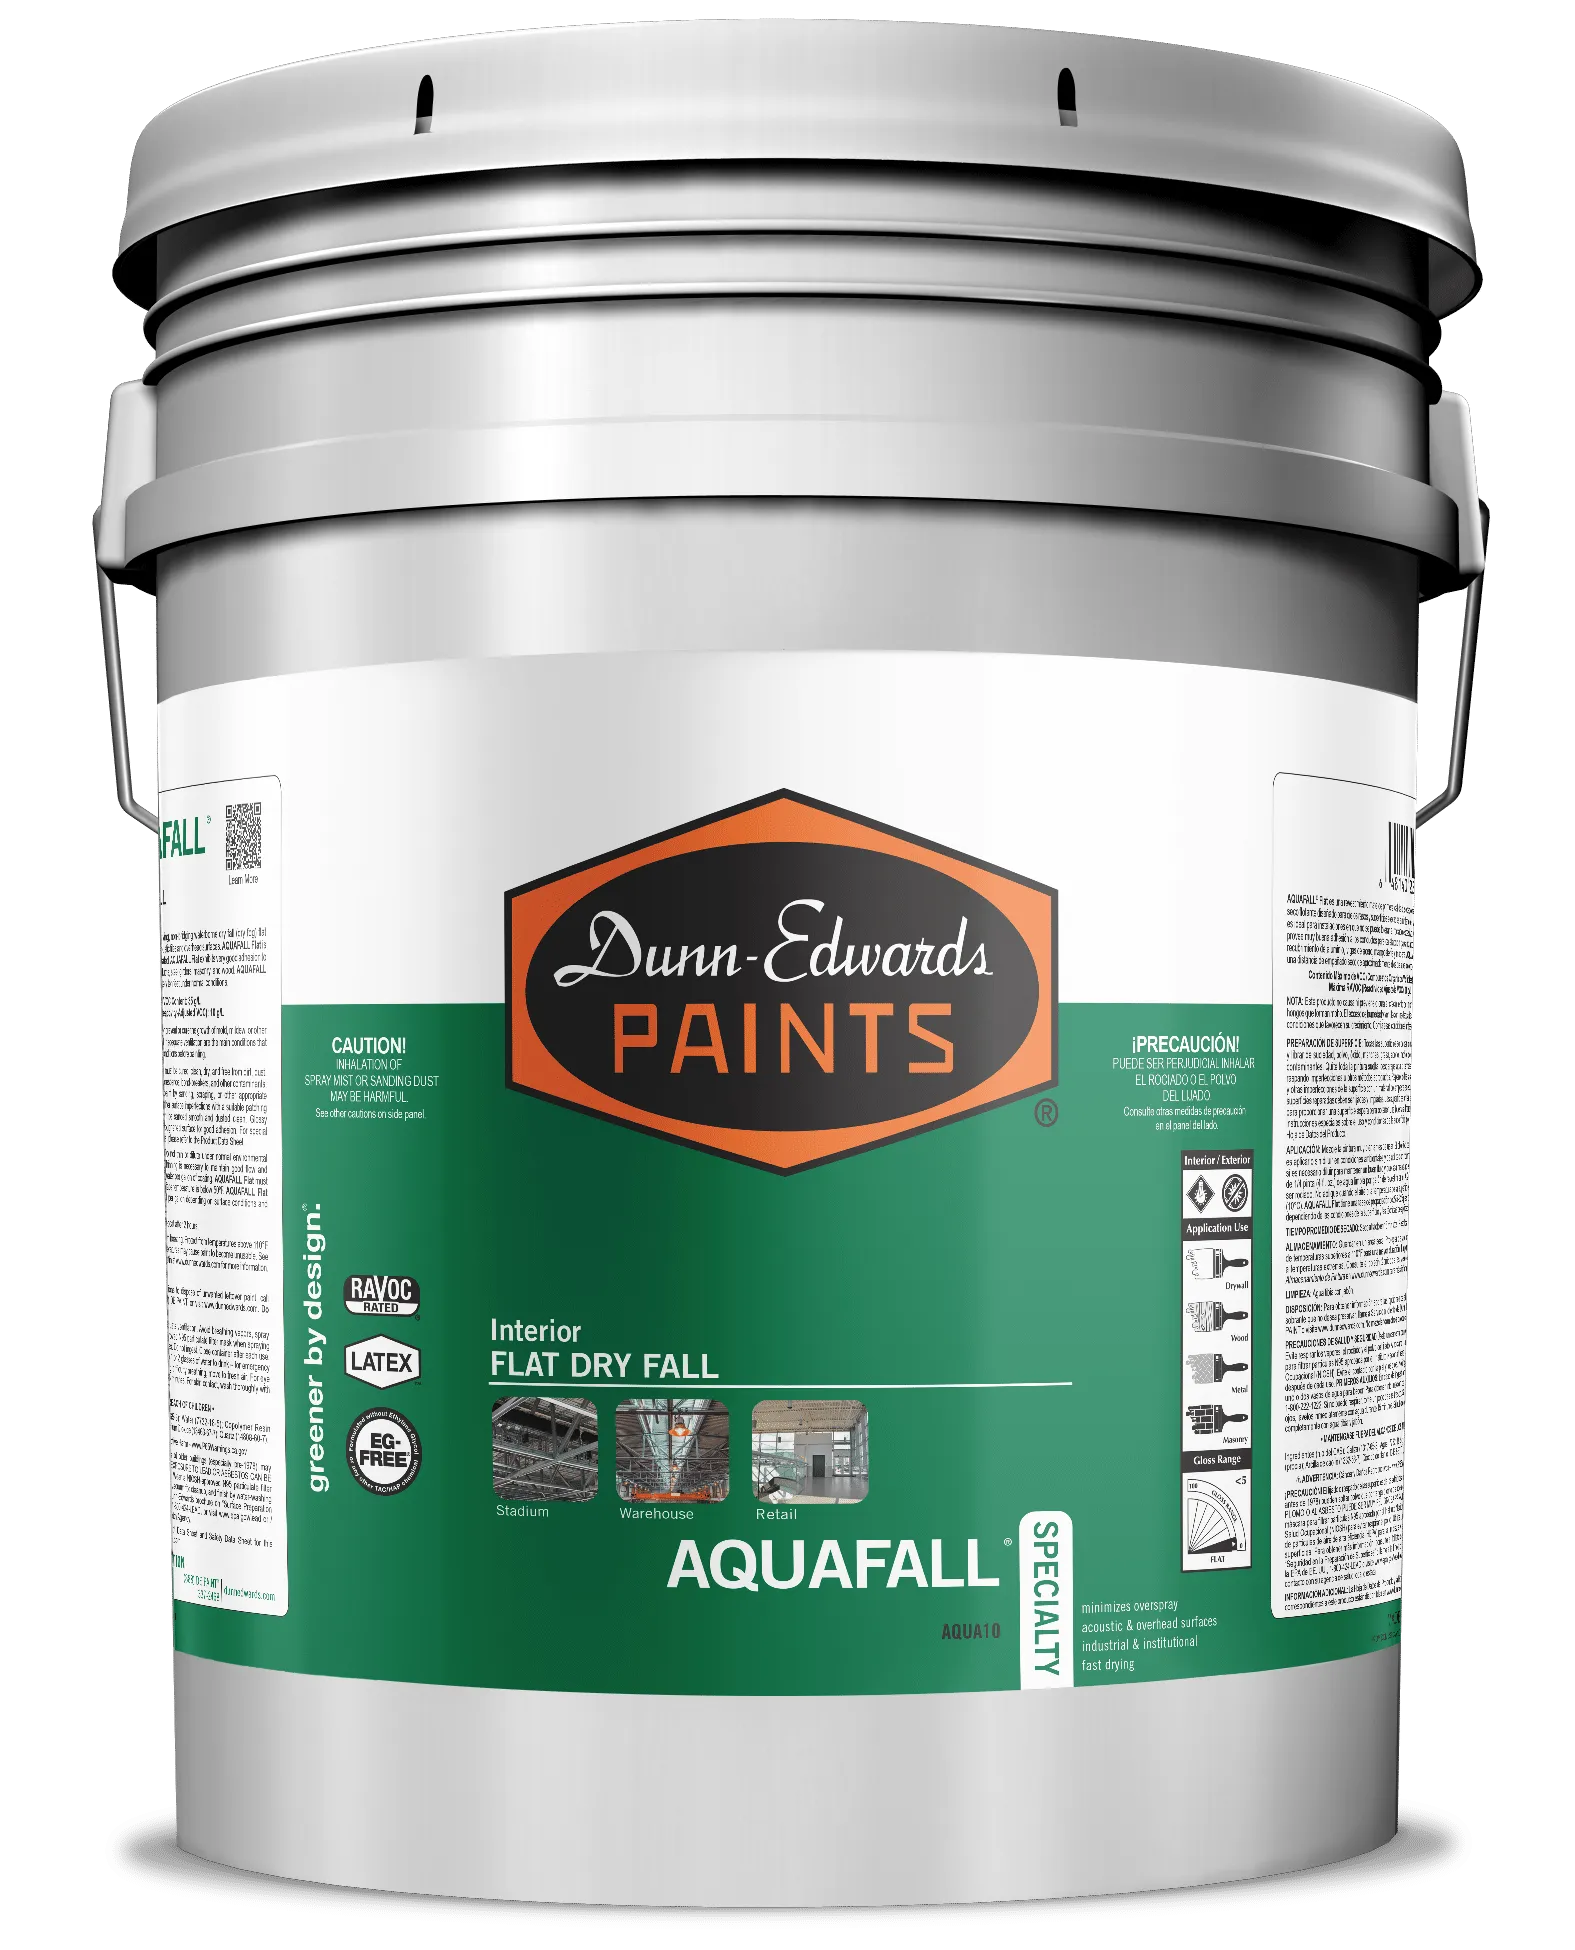 AQUAFALL Interior Flat Dry Fall Paint Can